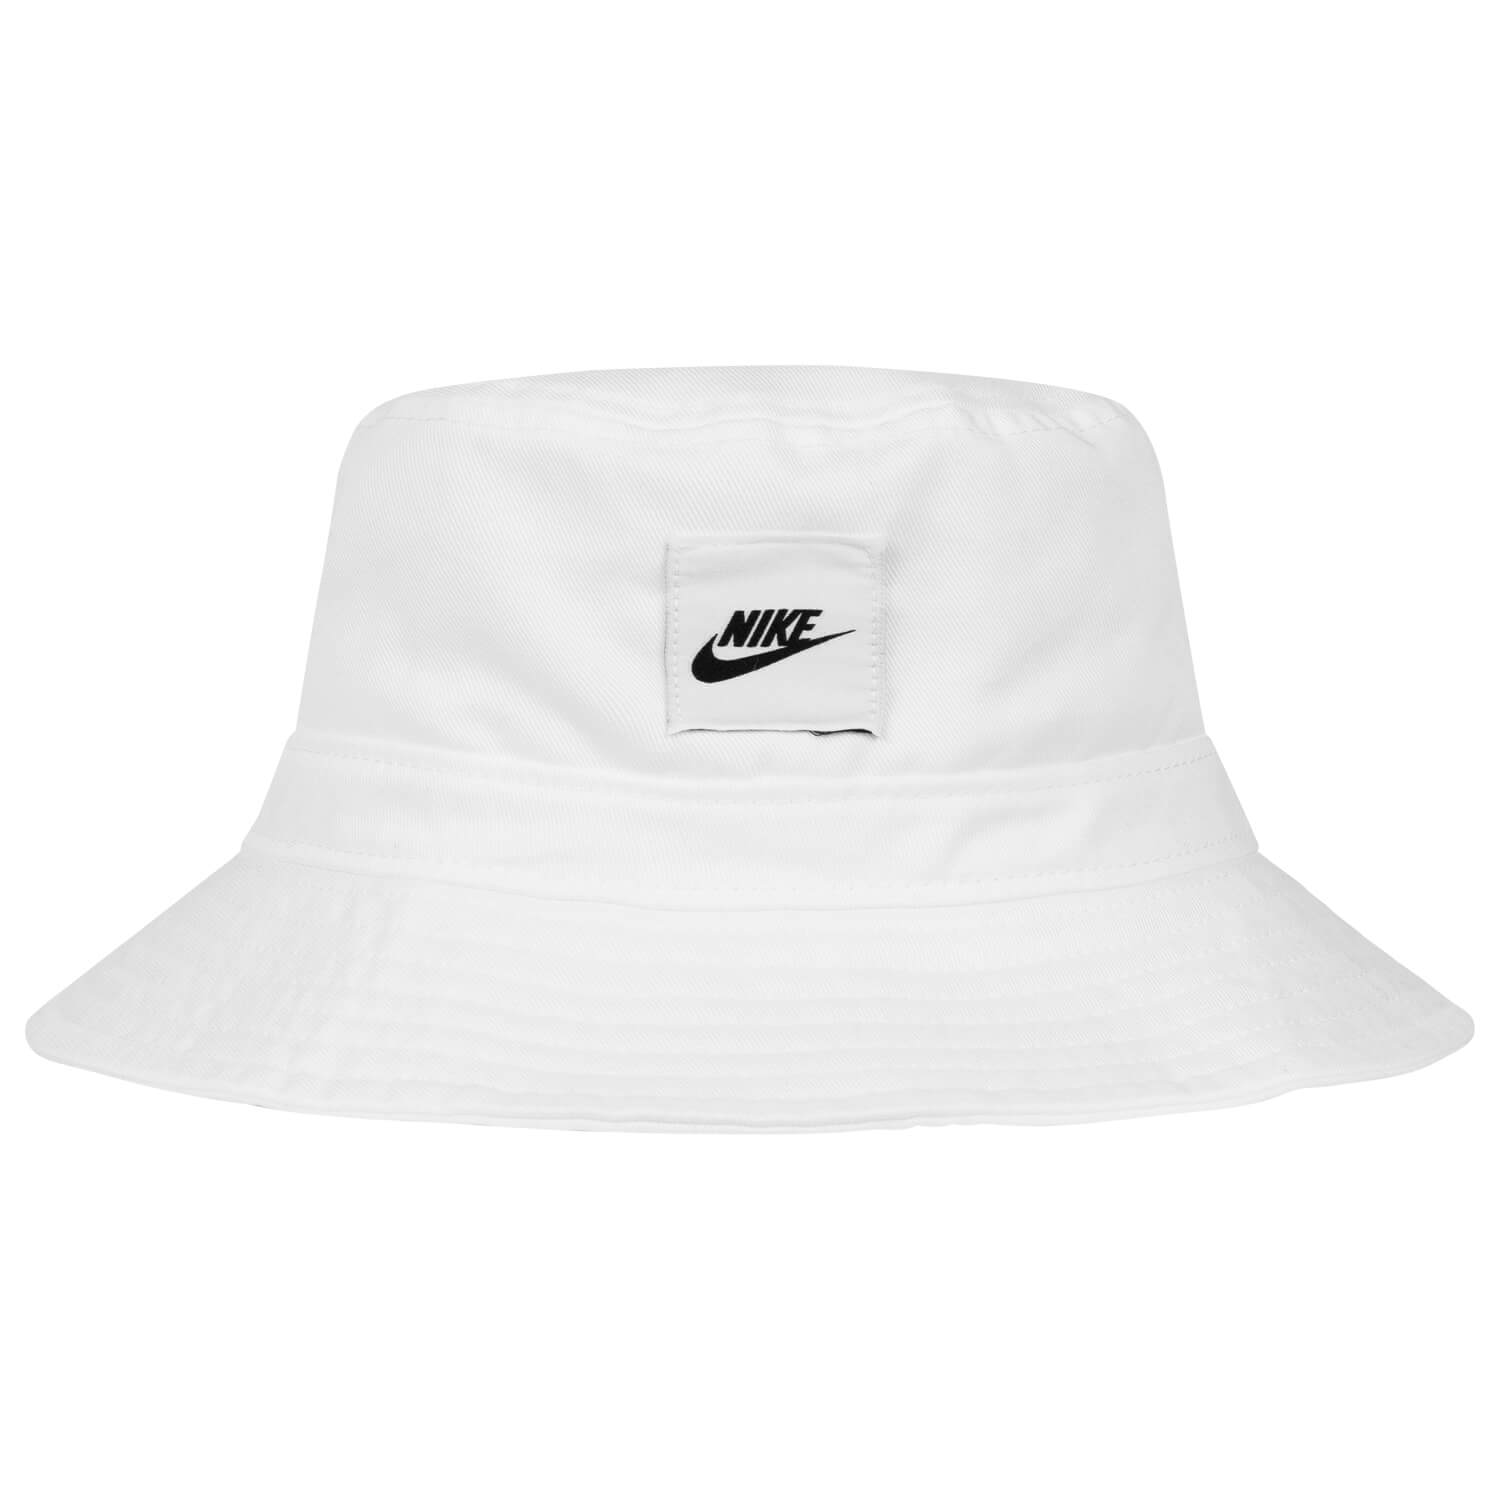 Bild 2: Nike Bucket Hat 1899 White